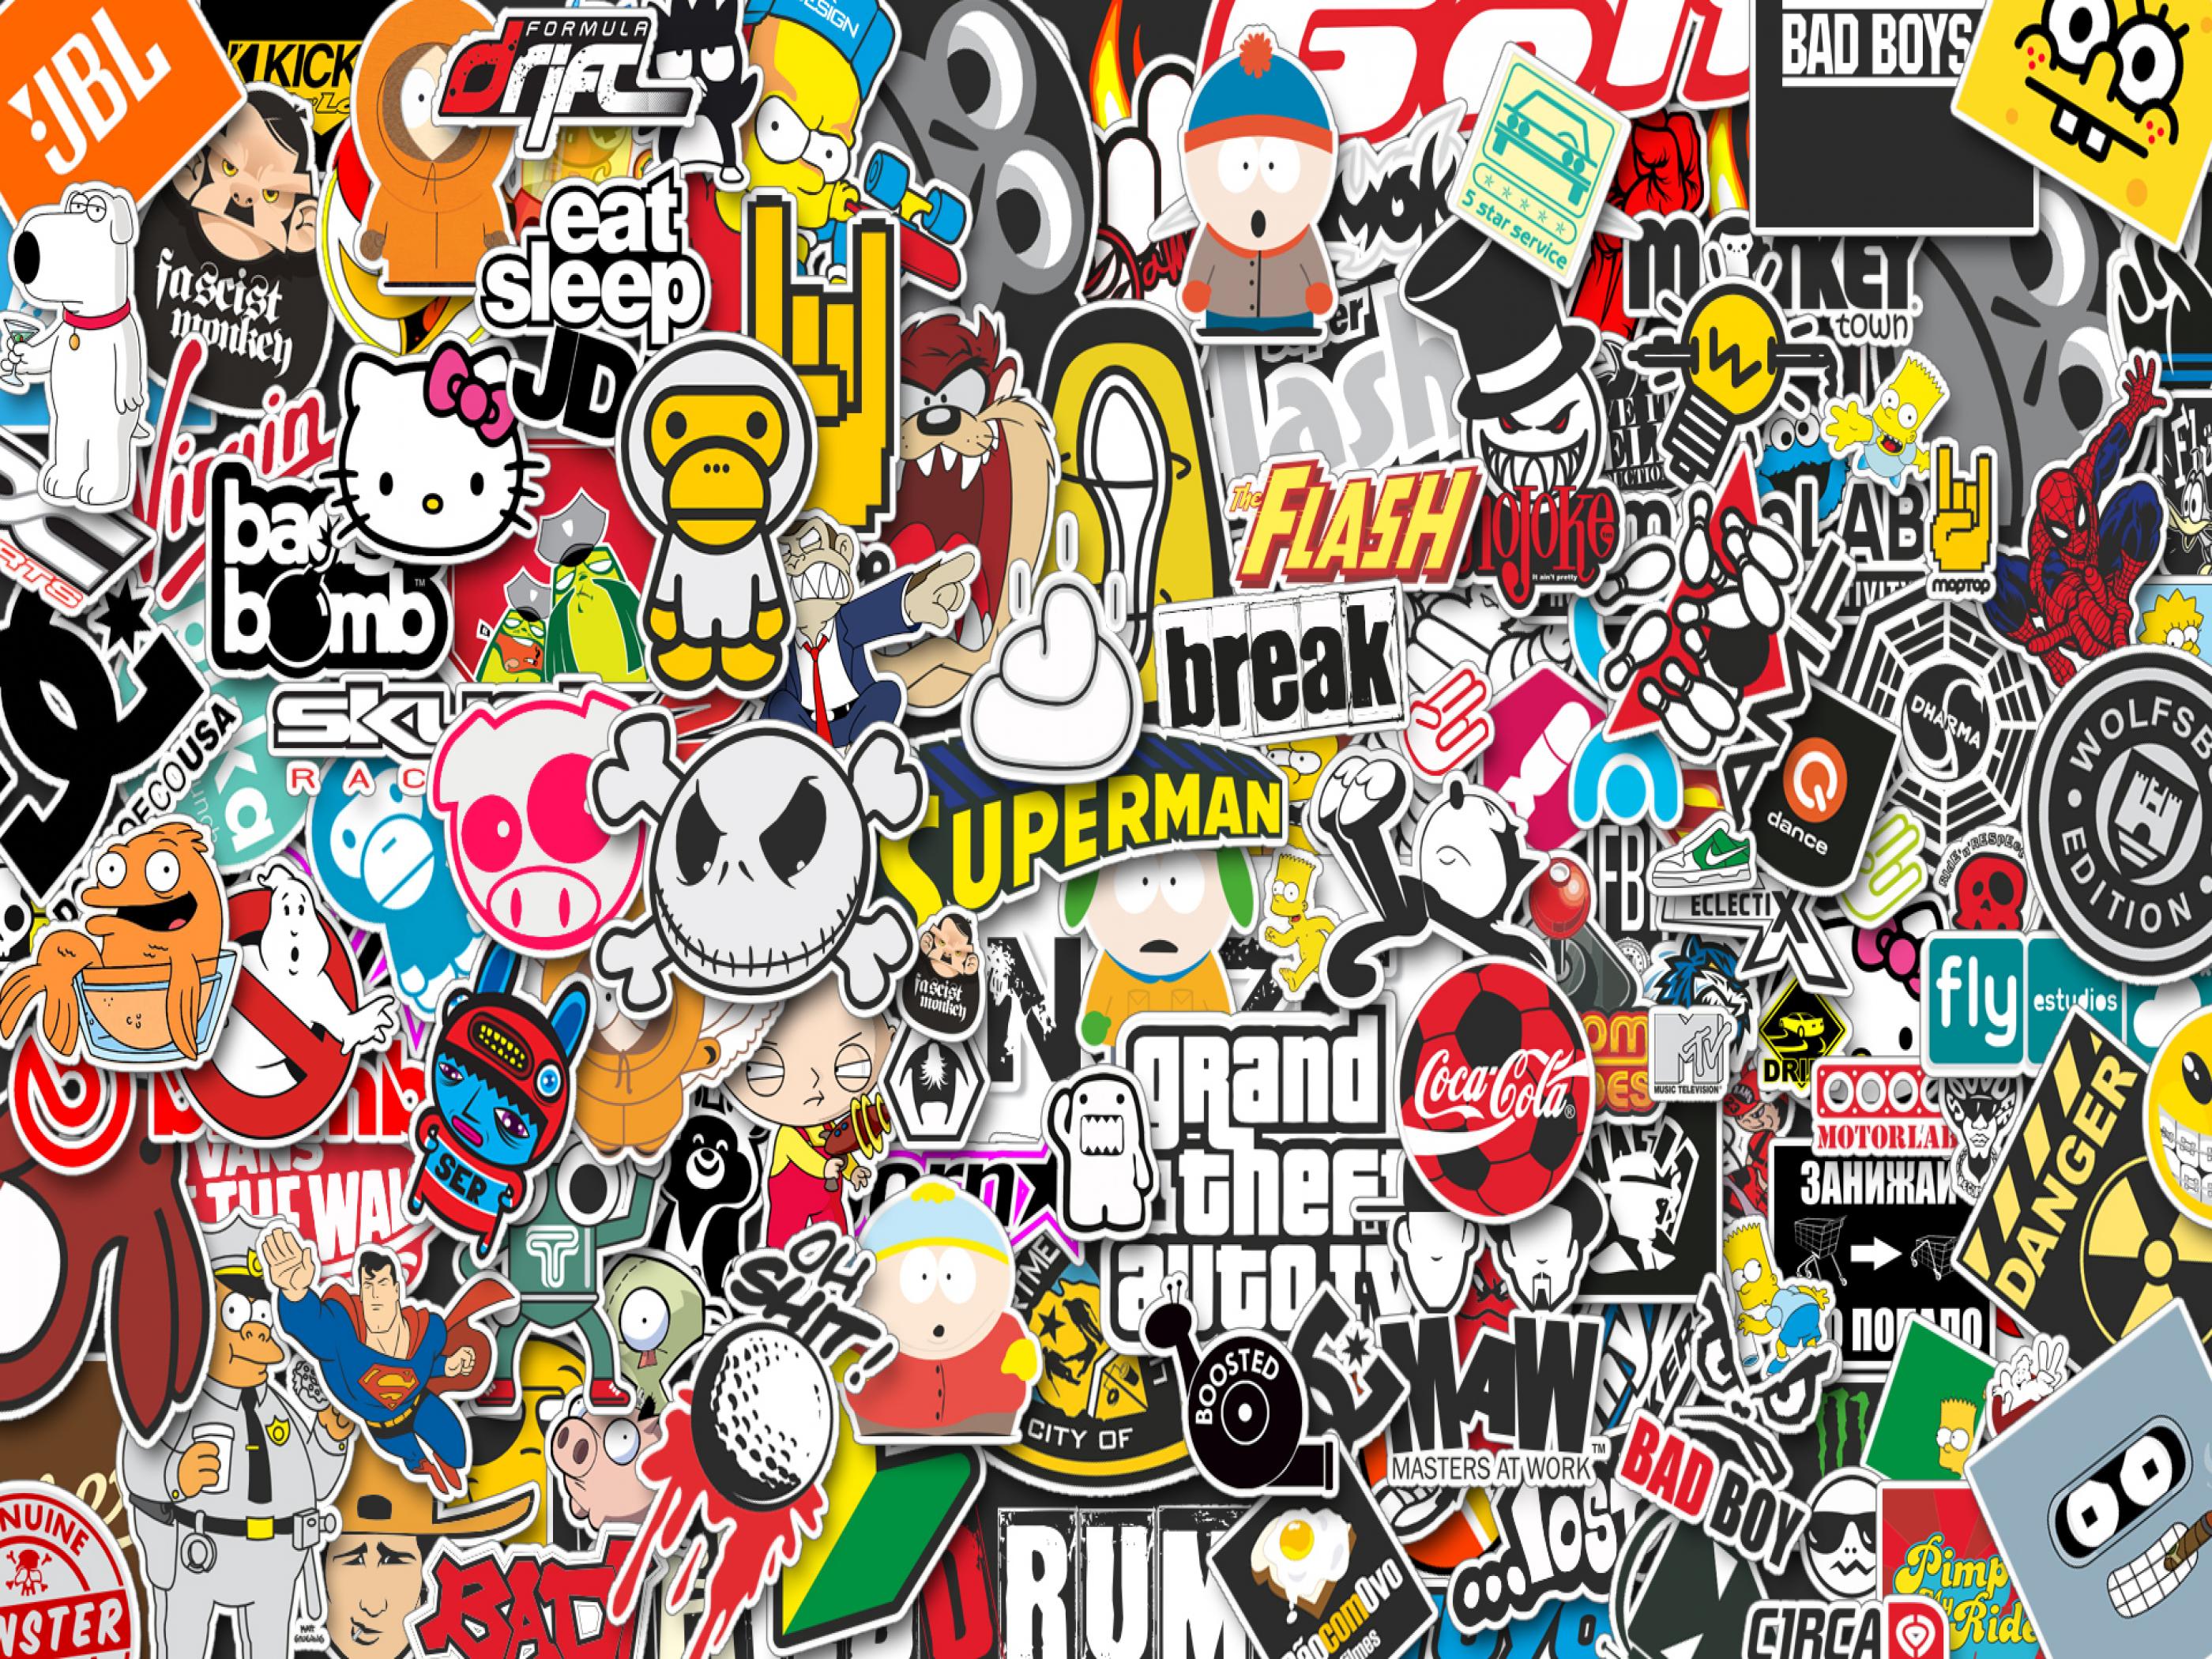 Logo Desktop Wallpaper